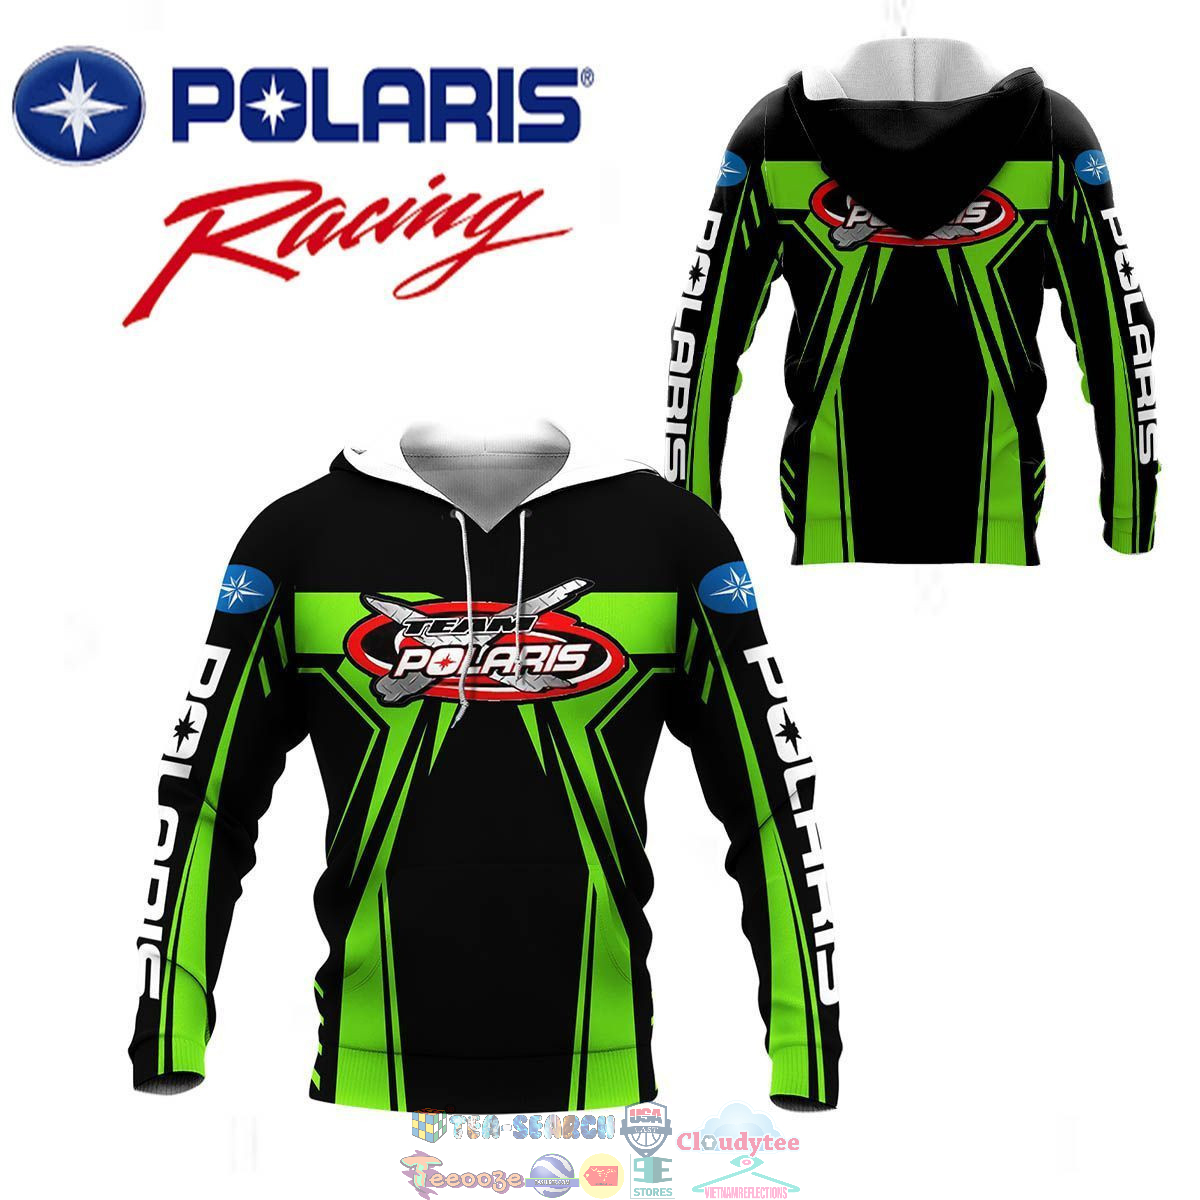 ddlE6Wuf-TH160822-45xxxPolaris-Racing-Team-ver-6-3D-hoodie-and-t-shirt3.jpg